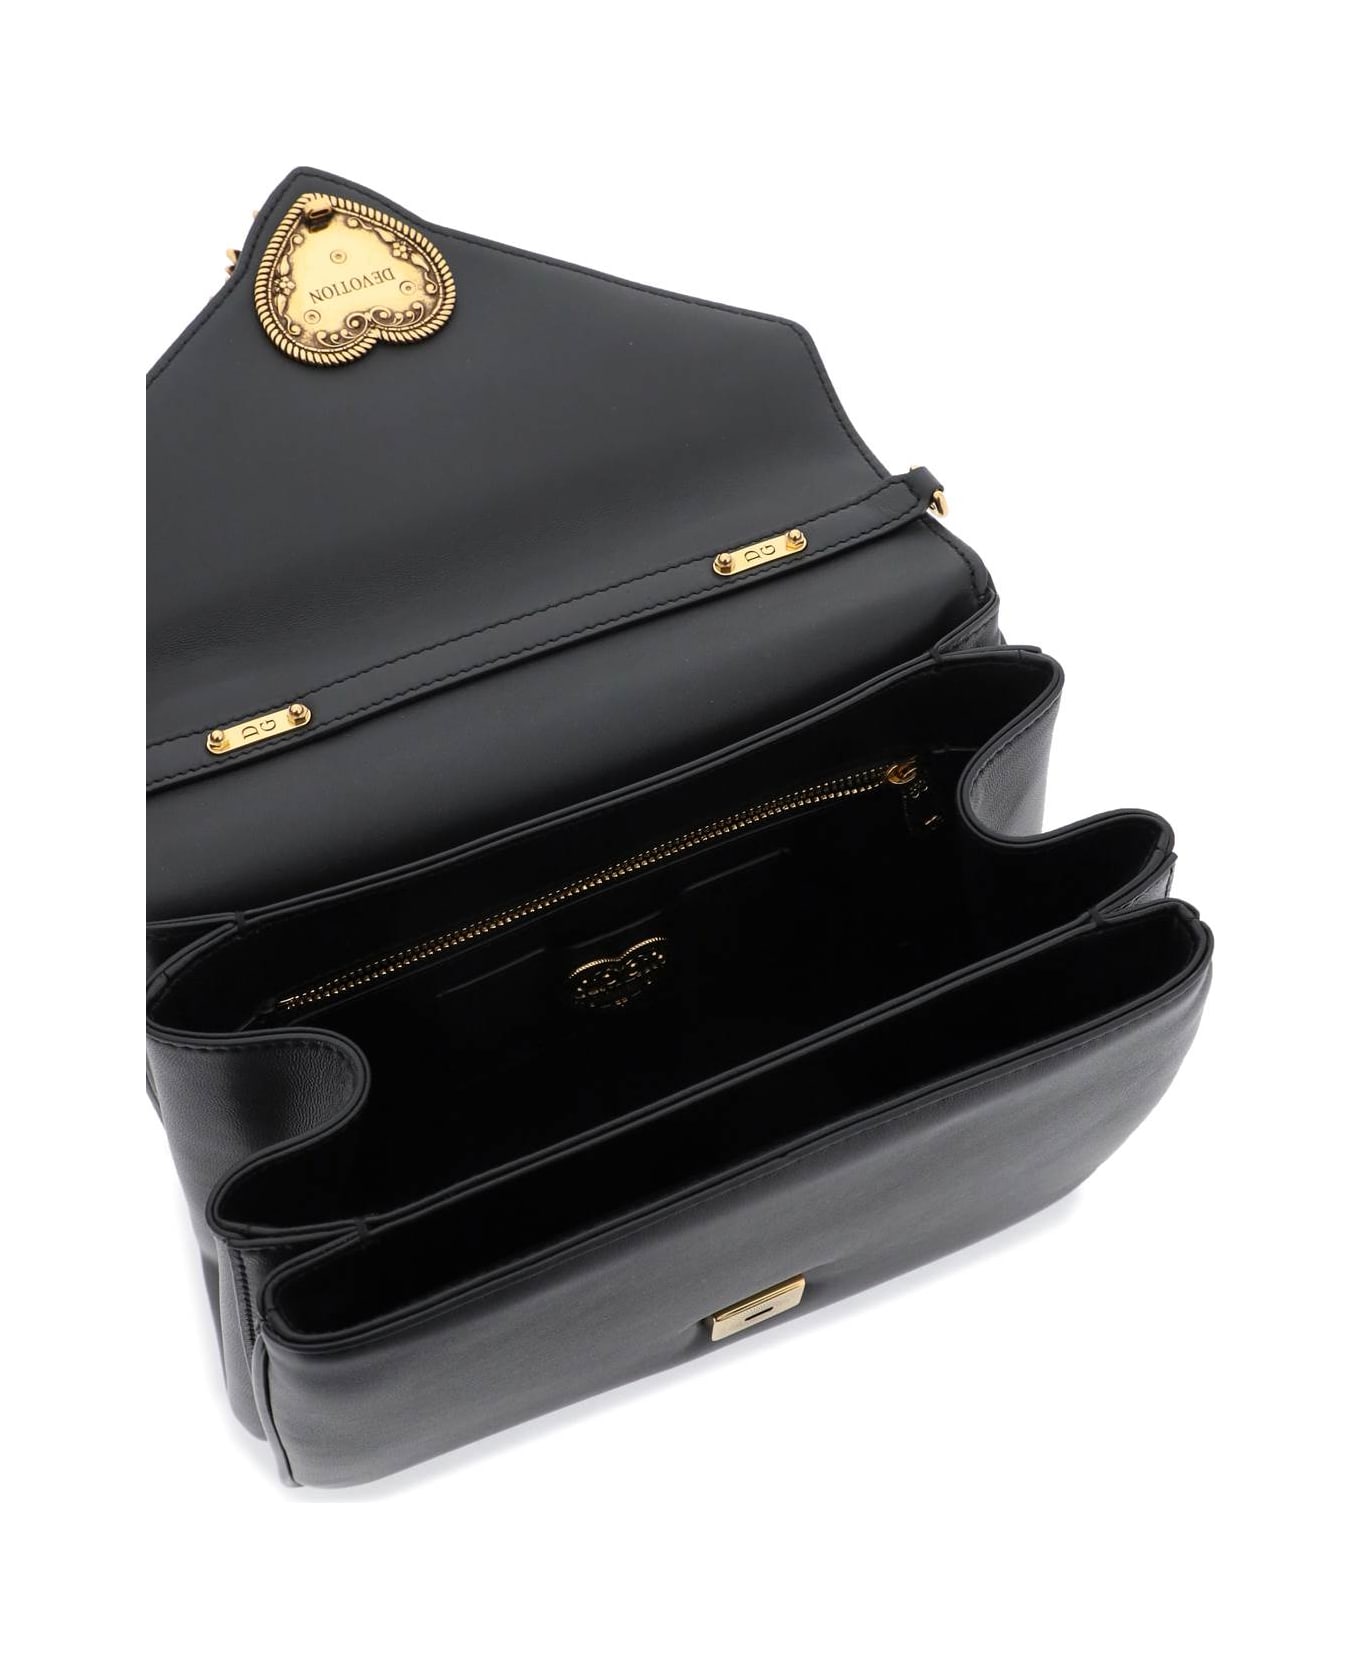 Dolce & Gabbana Devotion Handbag - NERO (Black)